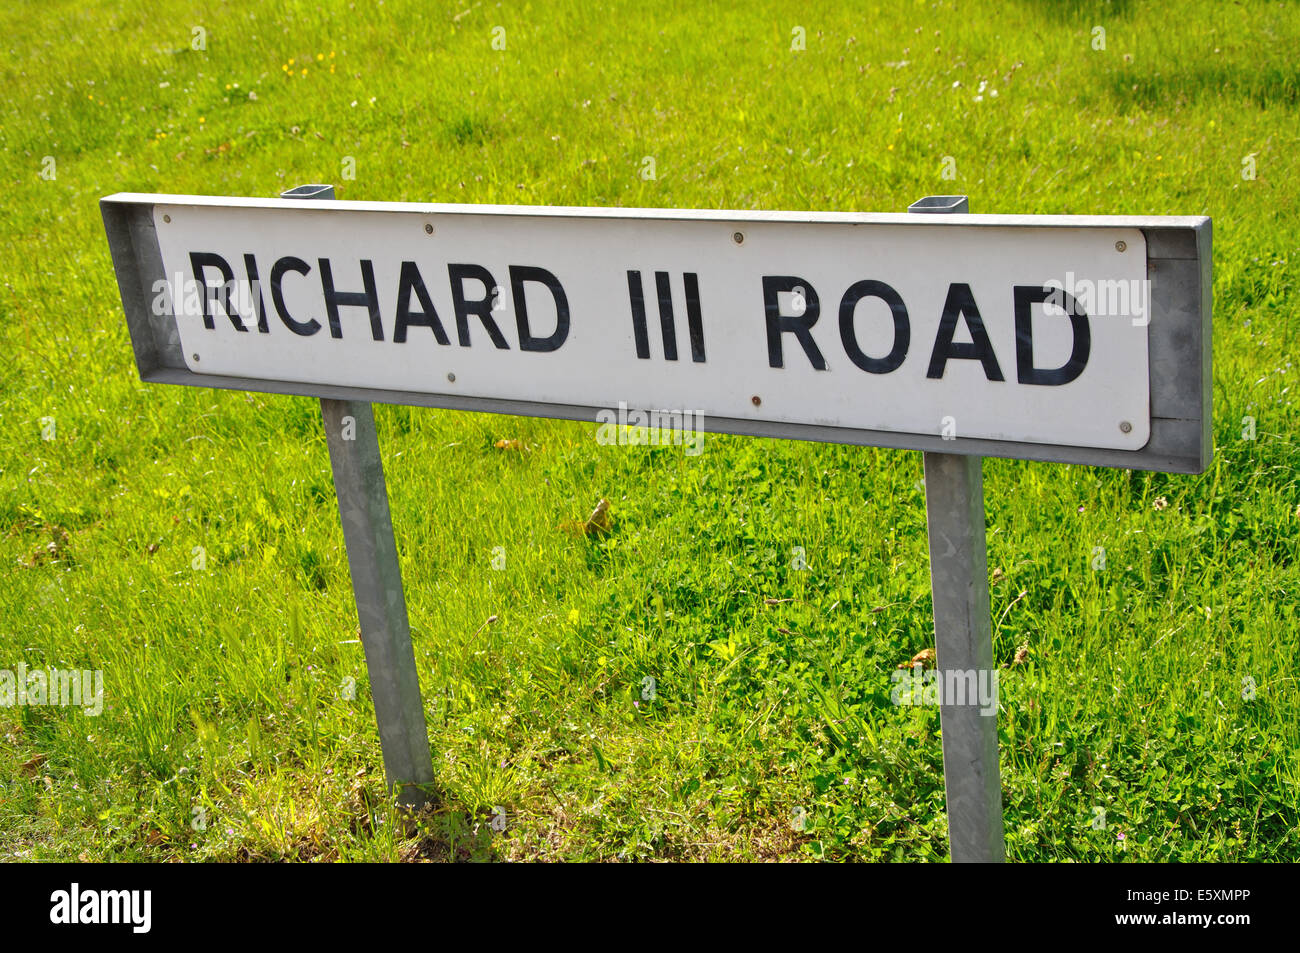 Richard III Road, road name sign, Leicester, England, UK Stock Photo